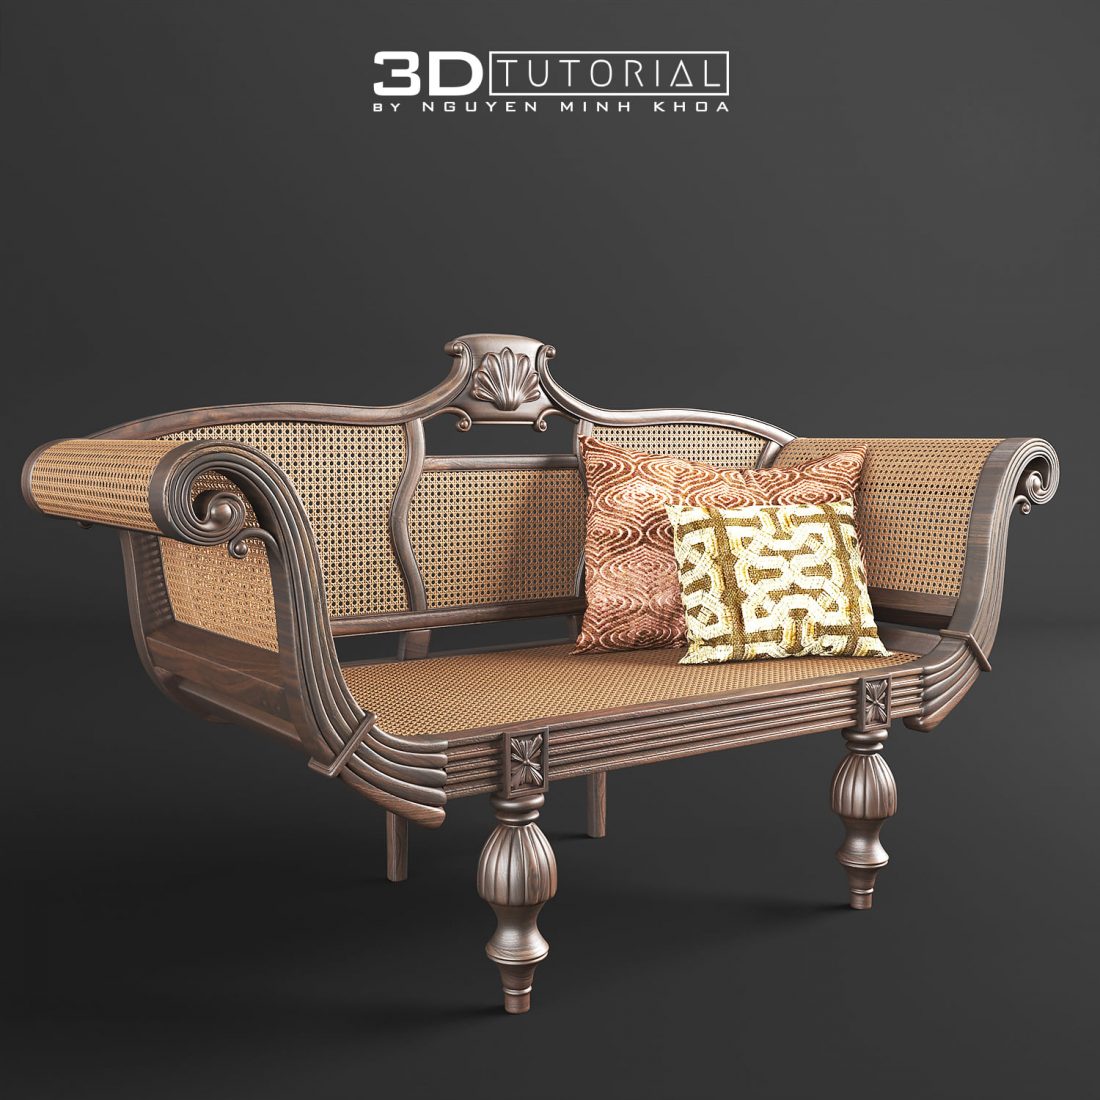 Free 3D Model Indochine Bench by Nguyen Minh Khoa